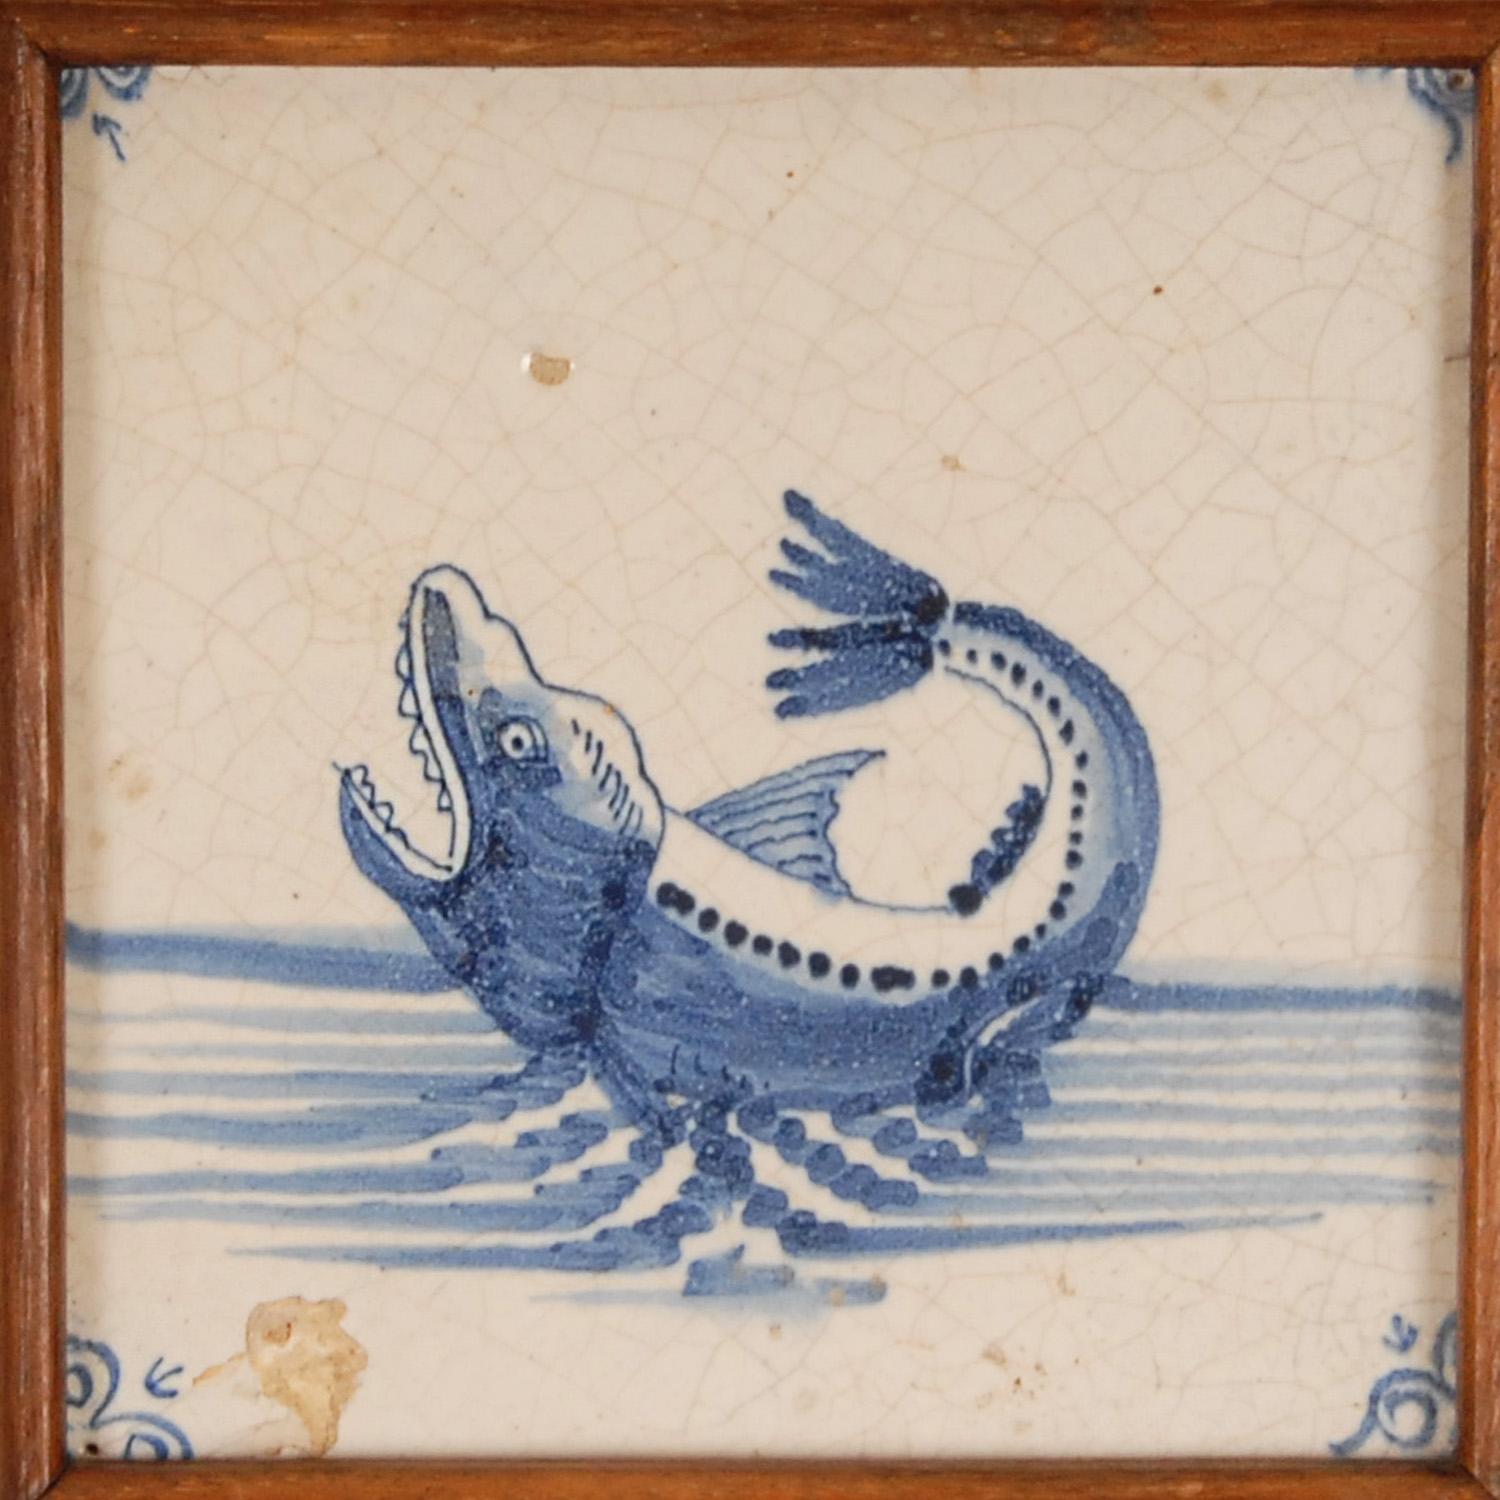 Baroque 18th Century Delft Tiles Blue White Sea Creatures Monsters Delft Tiles set of 4 For Sale